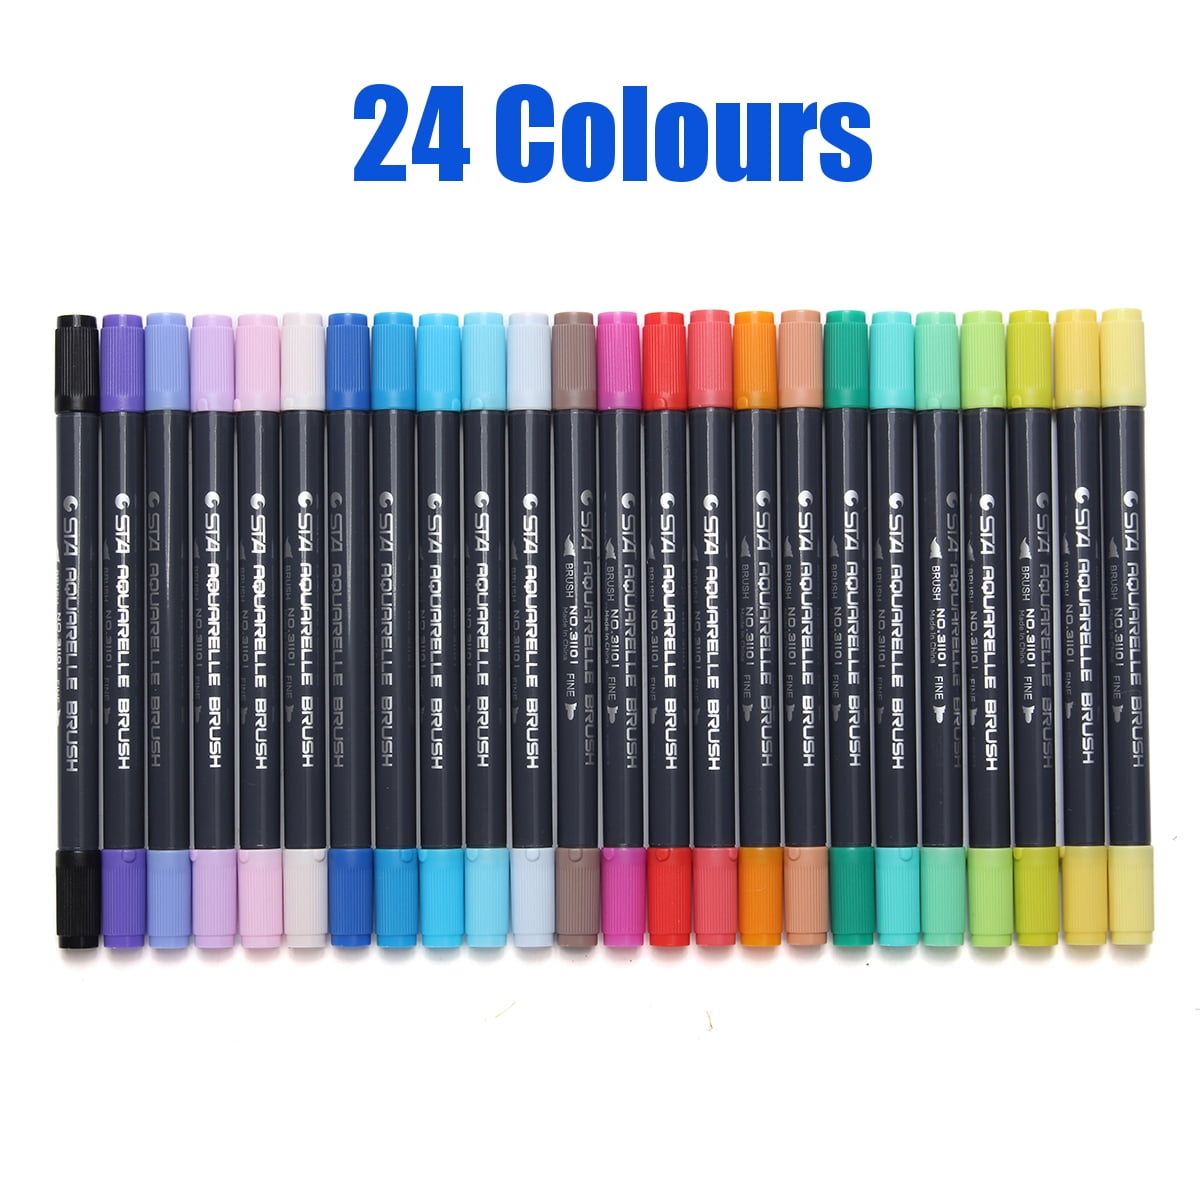 36 Colors Dual Tips Brush Drawing Pens Watercolor Art Markers Set Water based